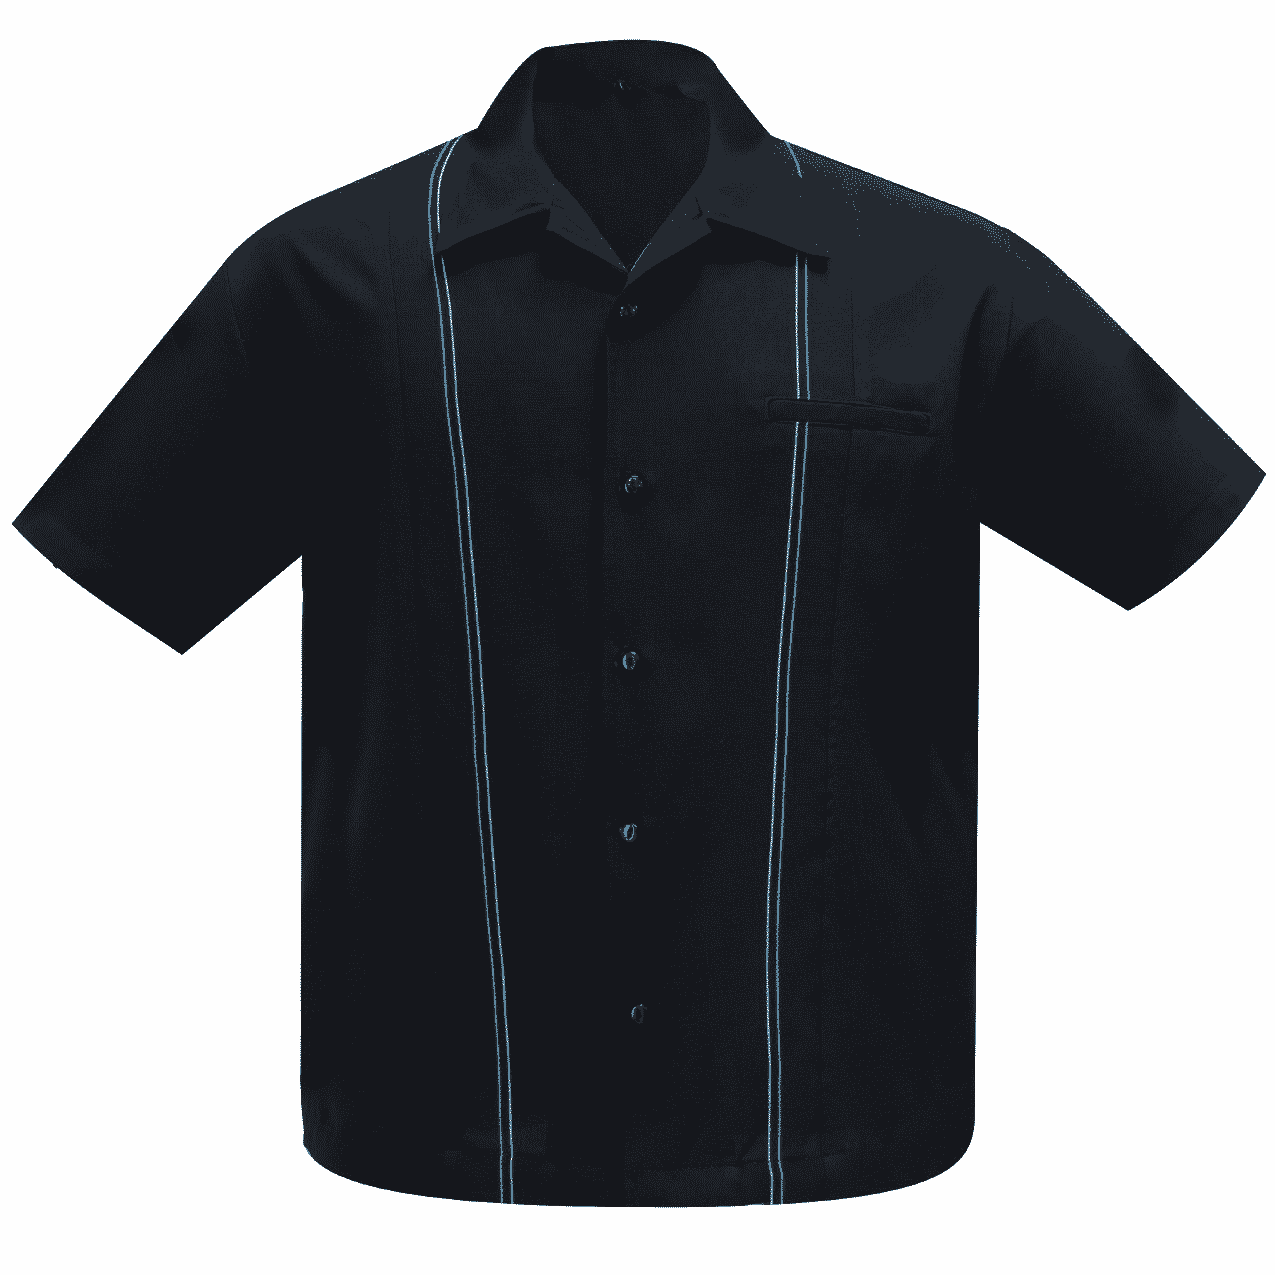 Black and Teal Stitching Bowling Shirt